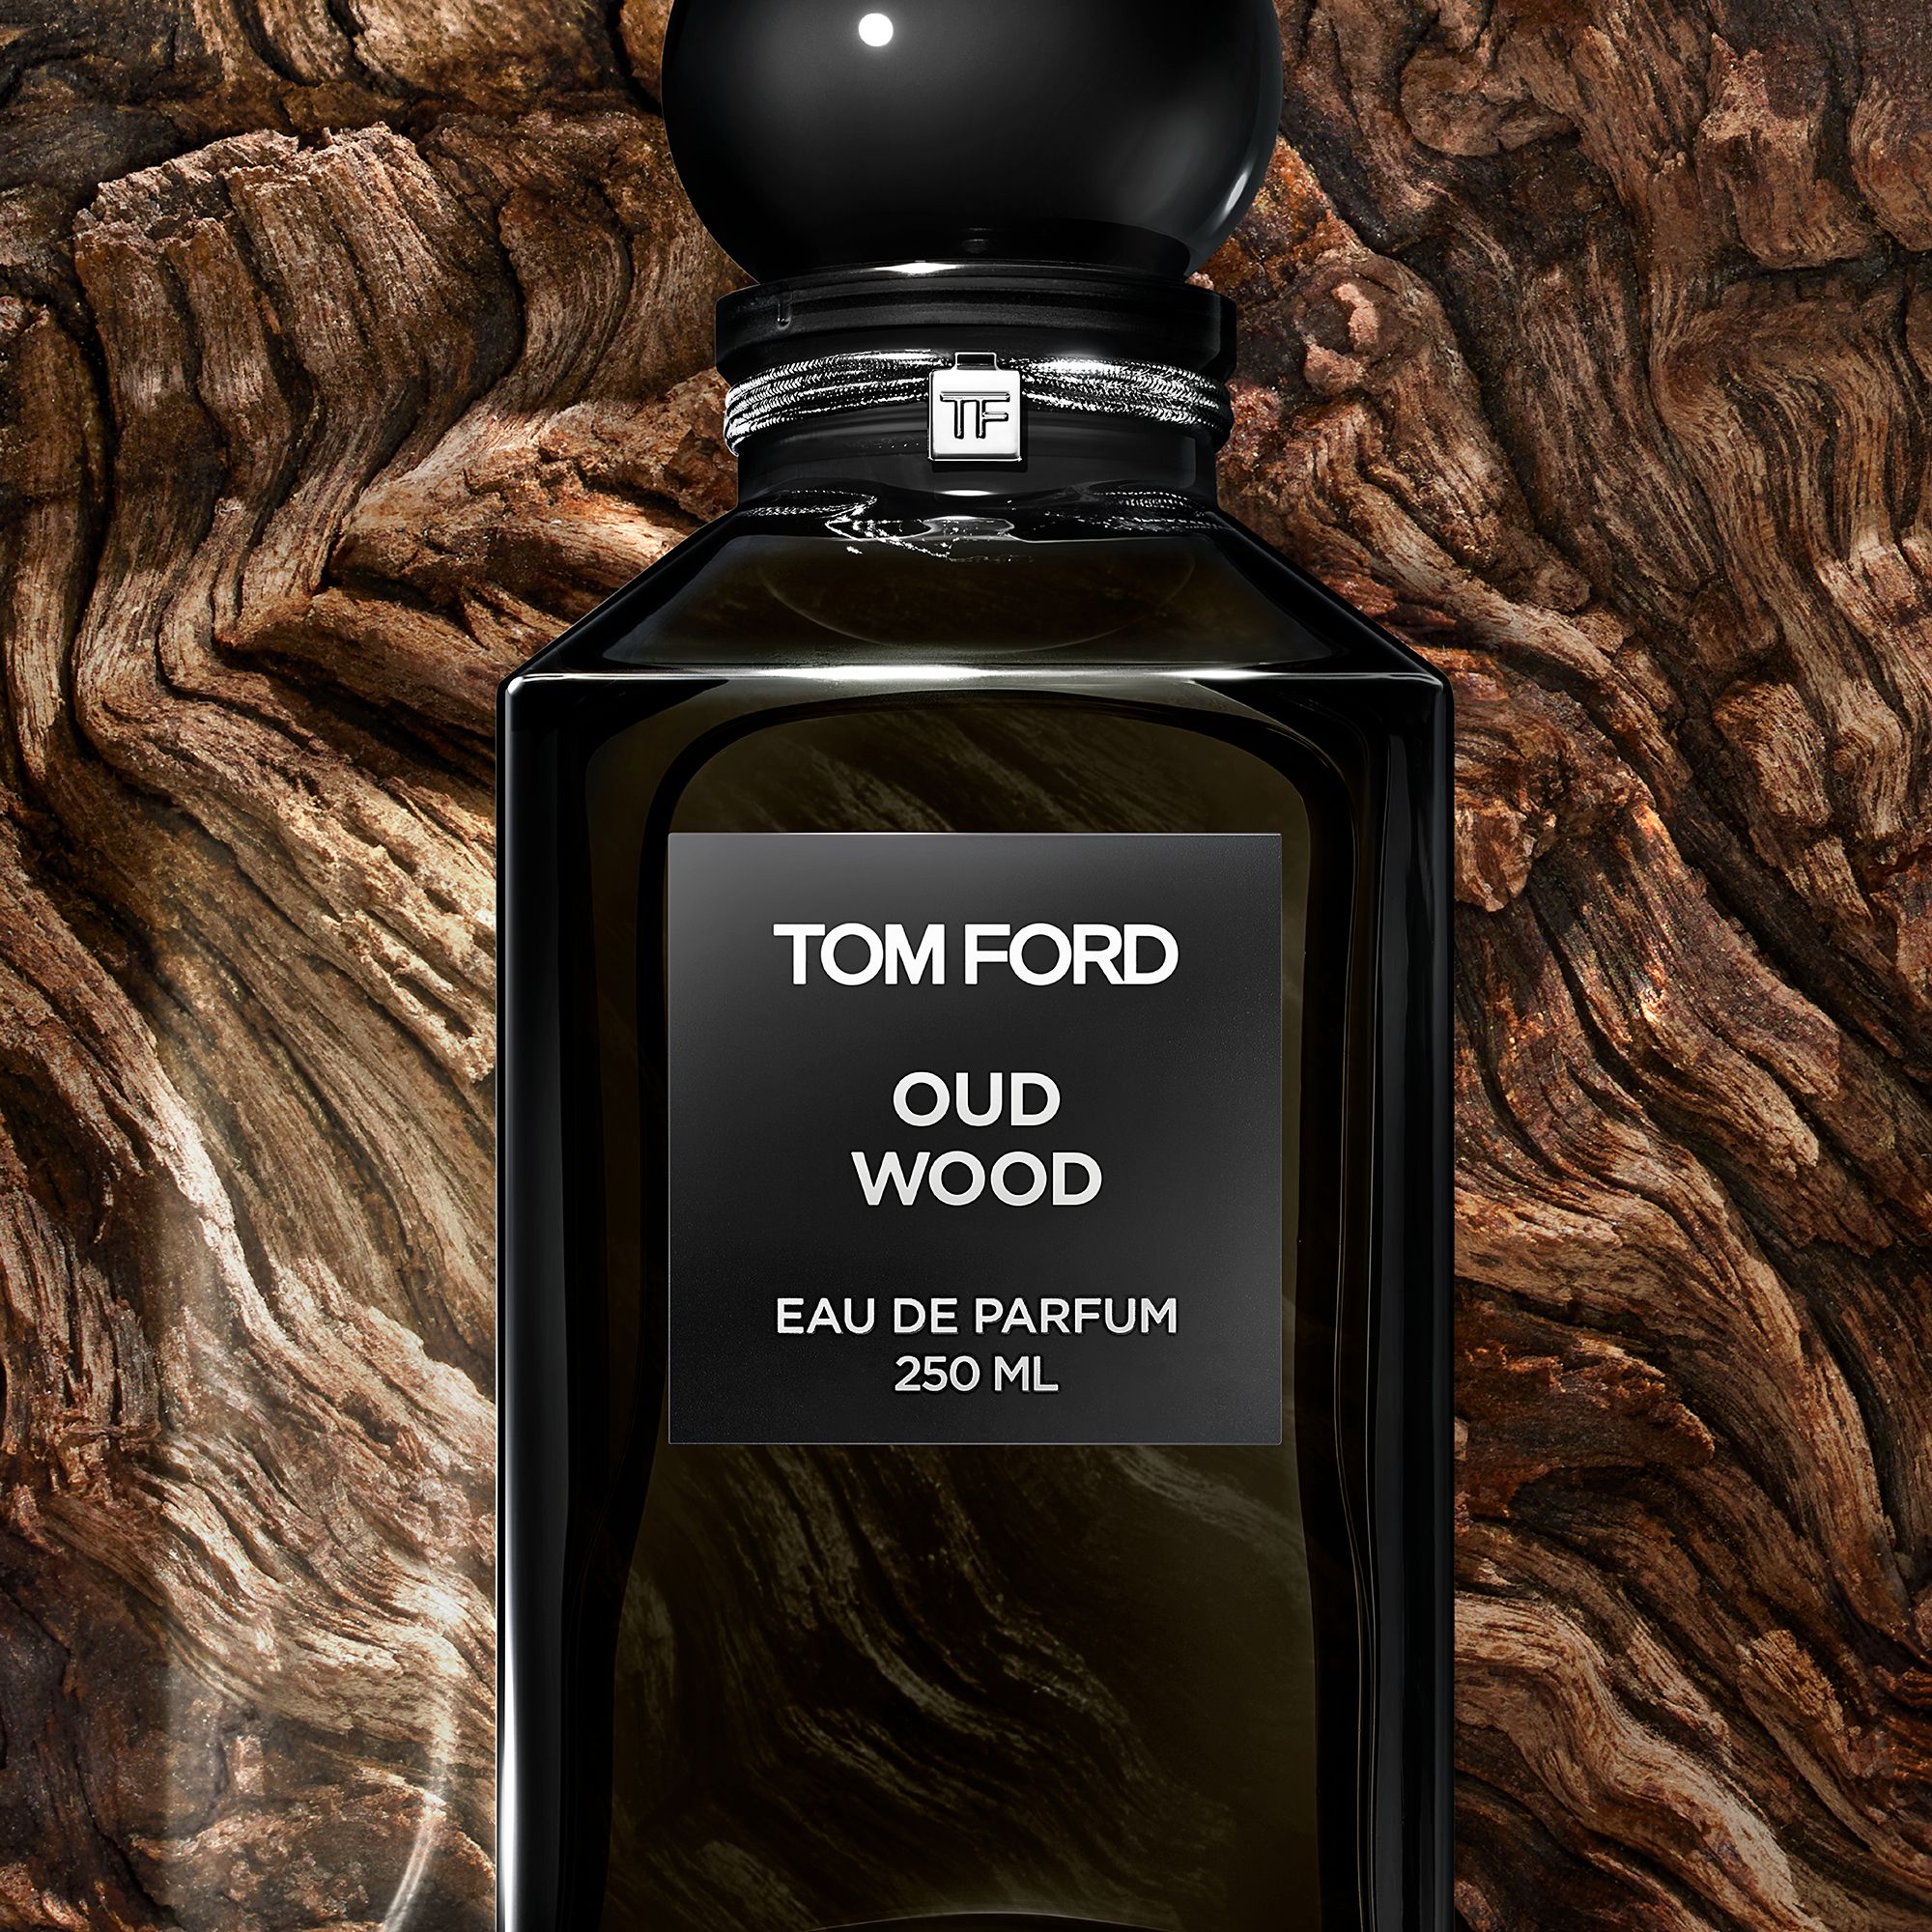 TOM FORD Private Blend Oud Wood Eau De Parfum, 250ml 2